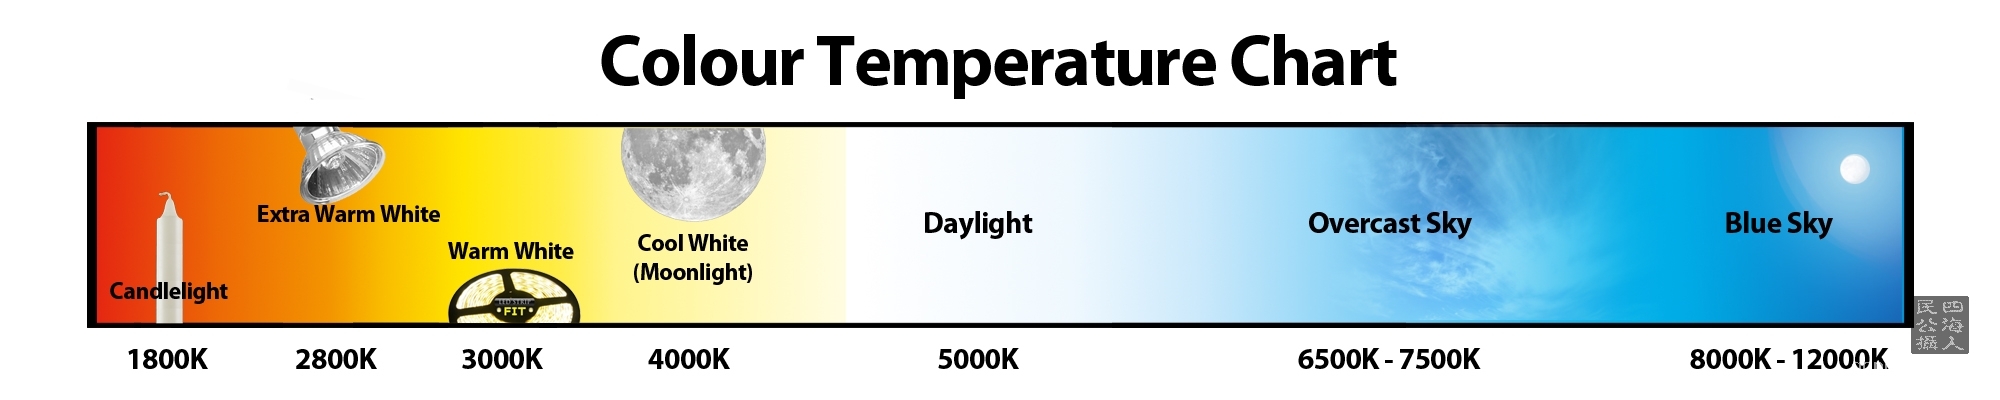 Colour-Temperature-Chart.jpg